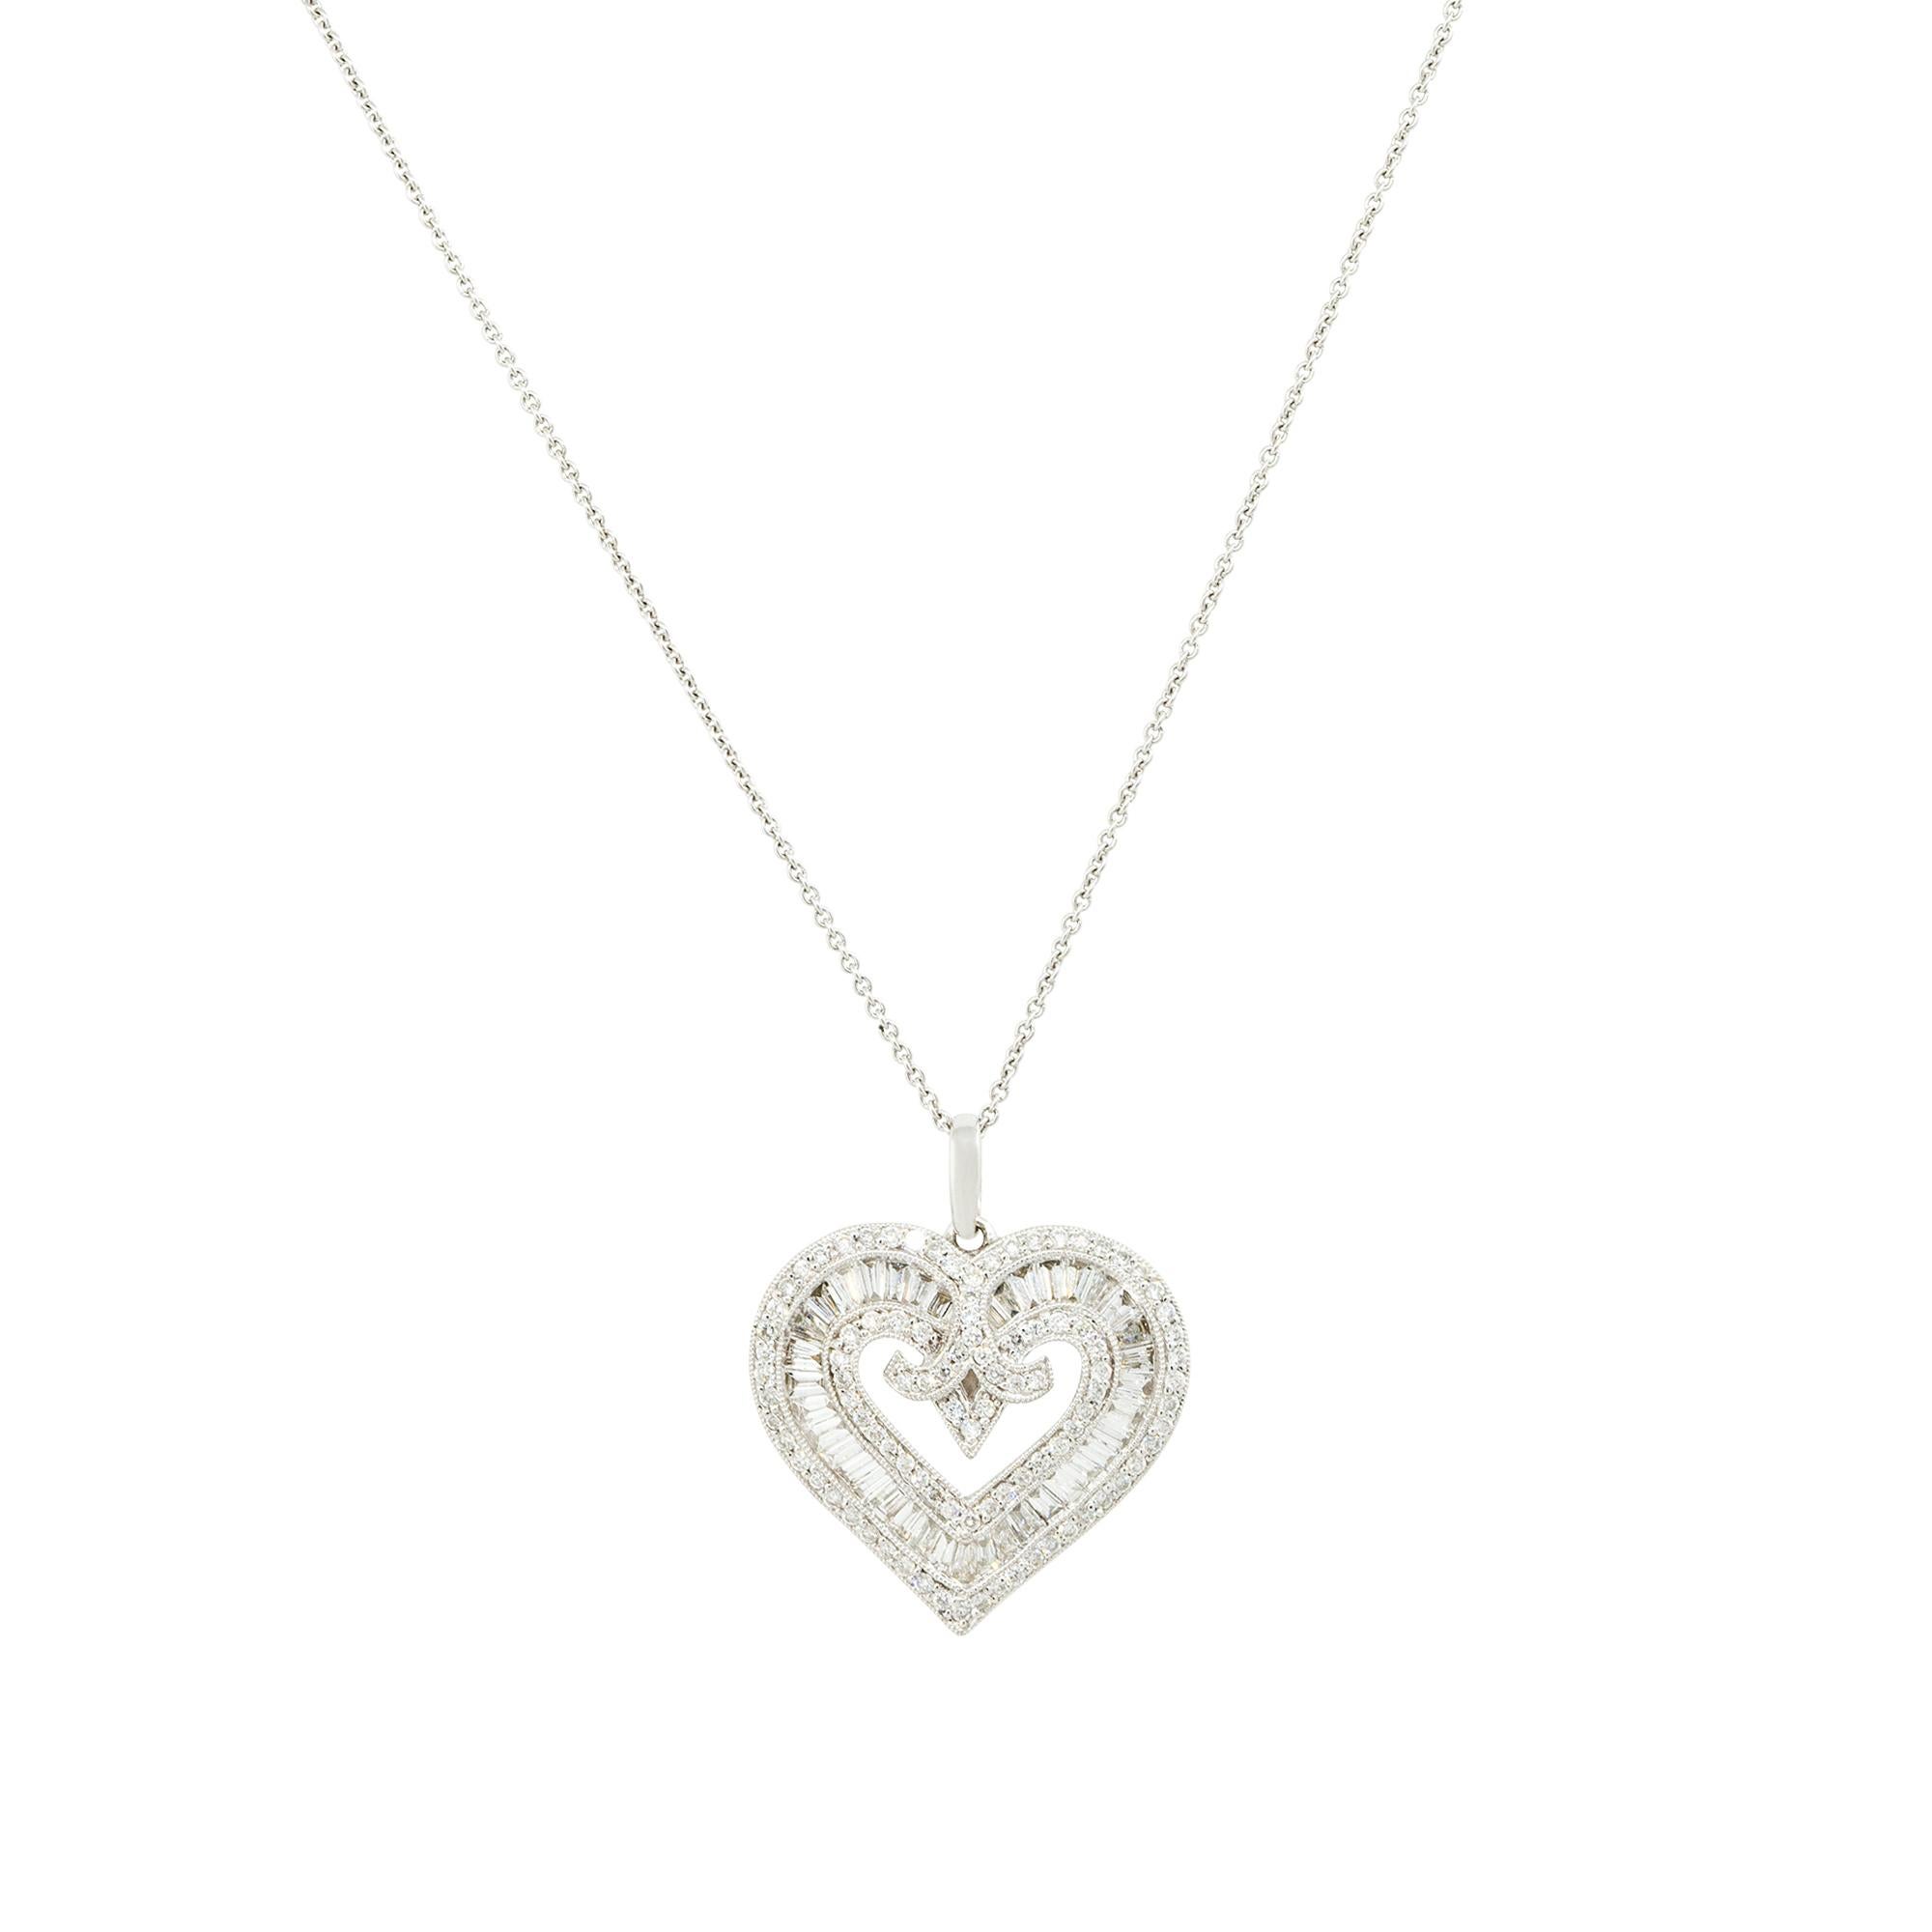 Baguette Cut 3.0 Carat Diamond Heart Necklace 18 Karat In Stock For Sale